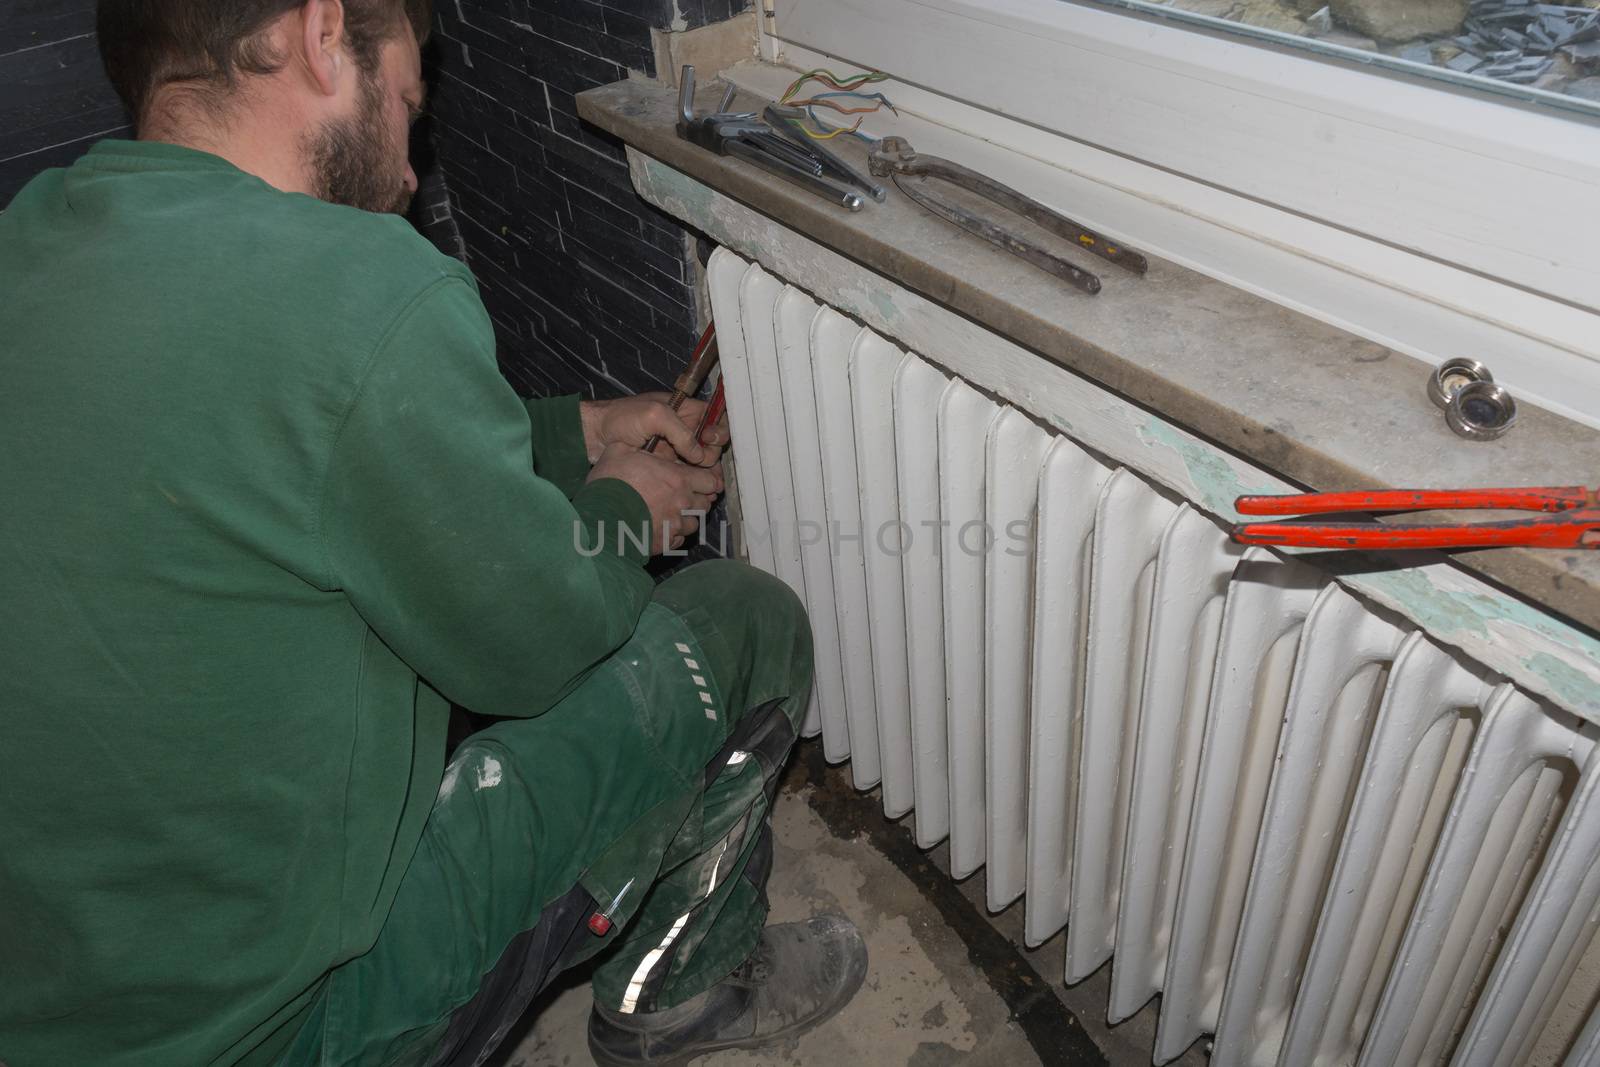 Plumbing or heating plumber dismantles an old finned tube radiator